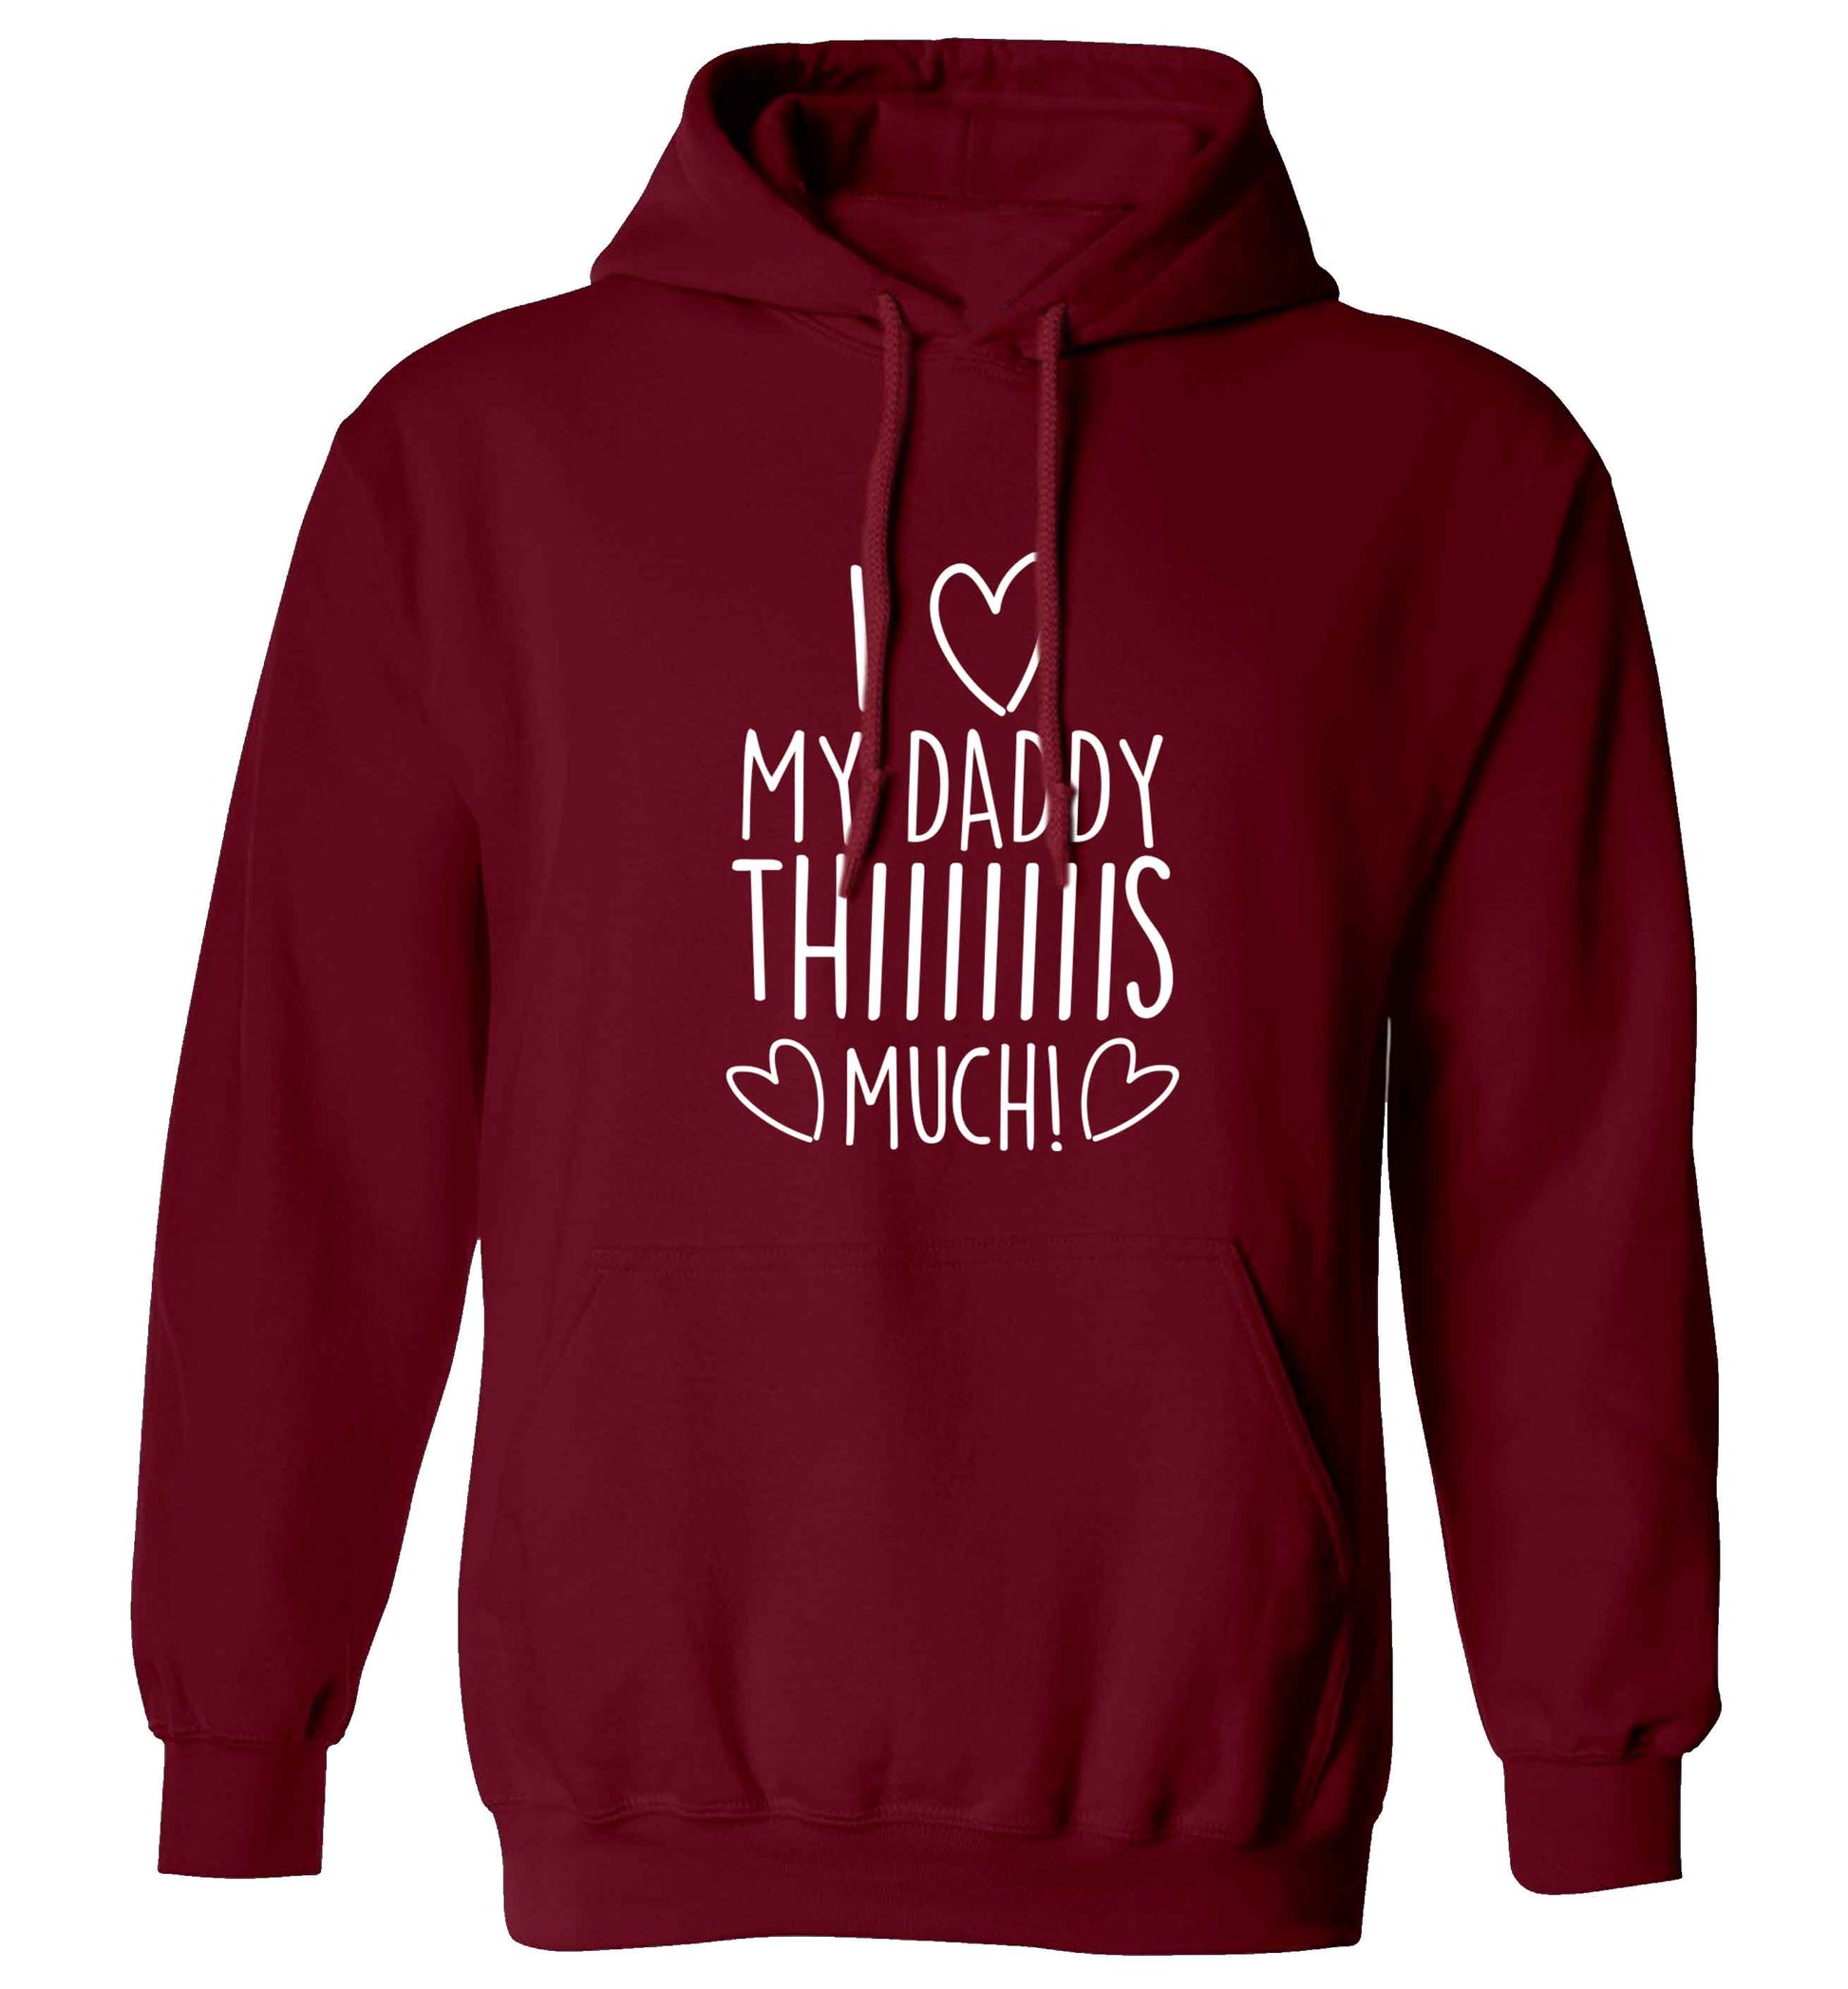 I love my daddy thiiiiis much! adults unisex maroon hoodie 2XL